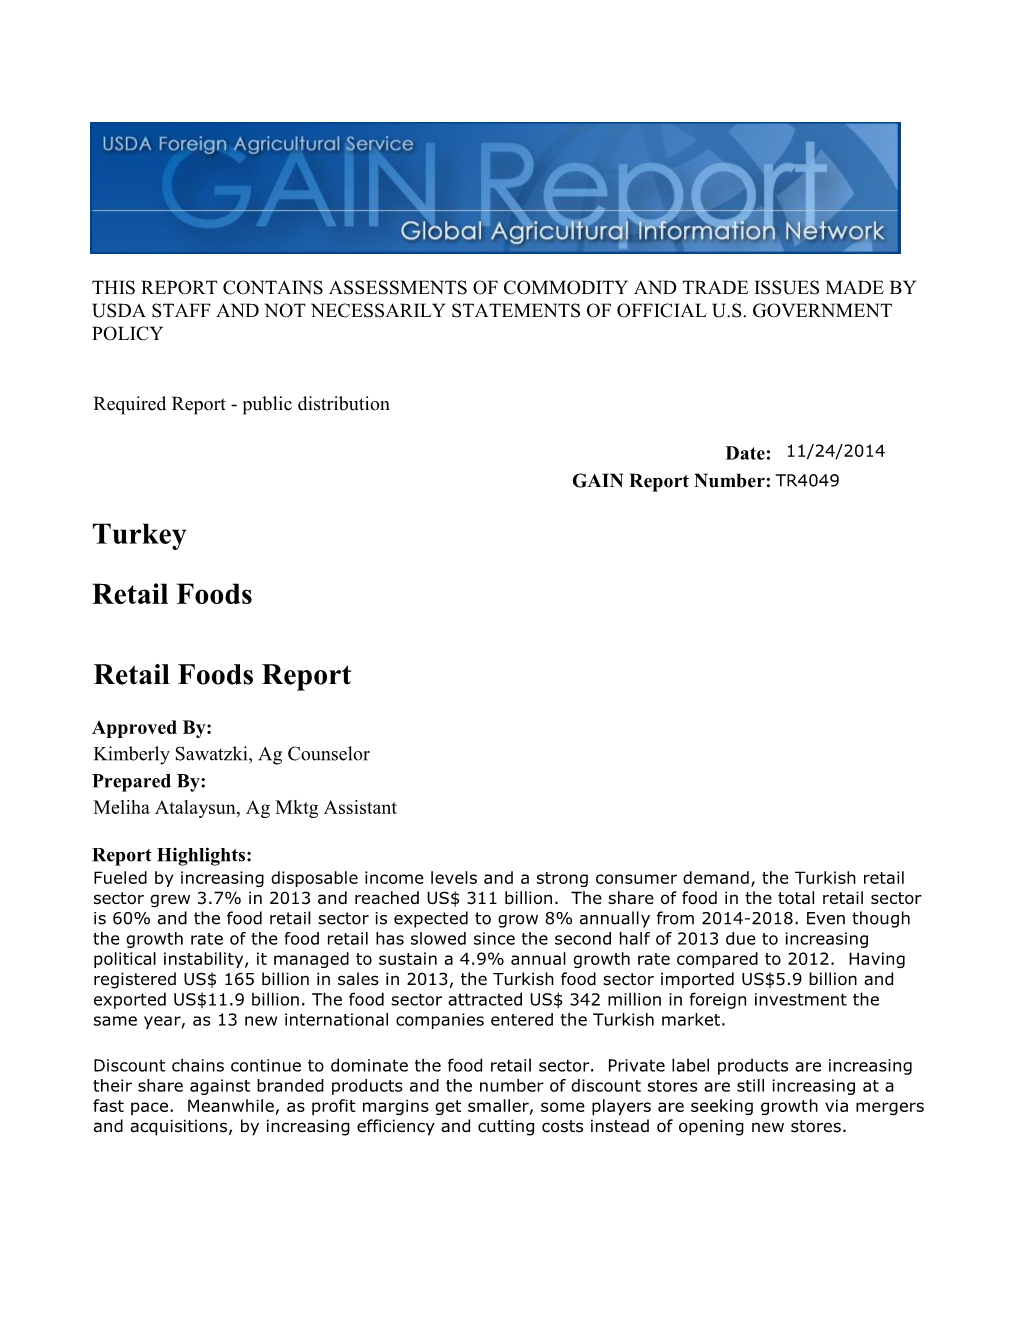 Retail Foods Report Retail Foods Turkey